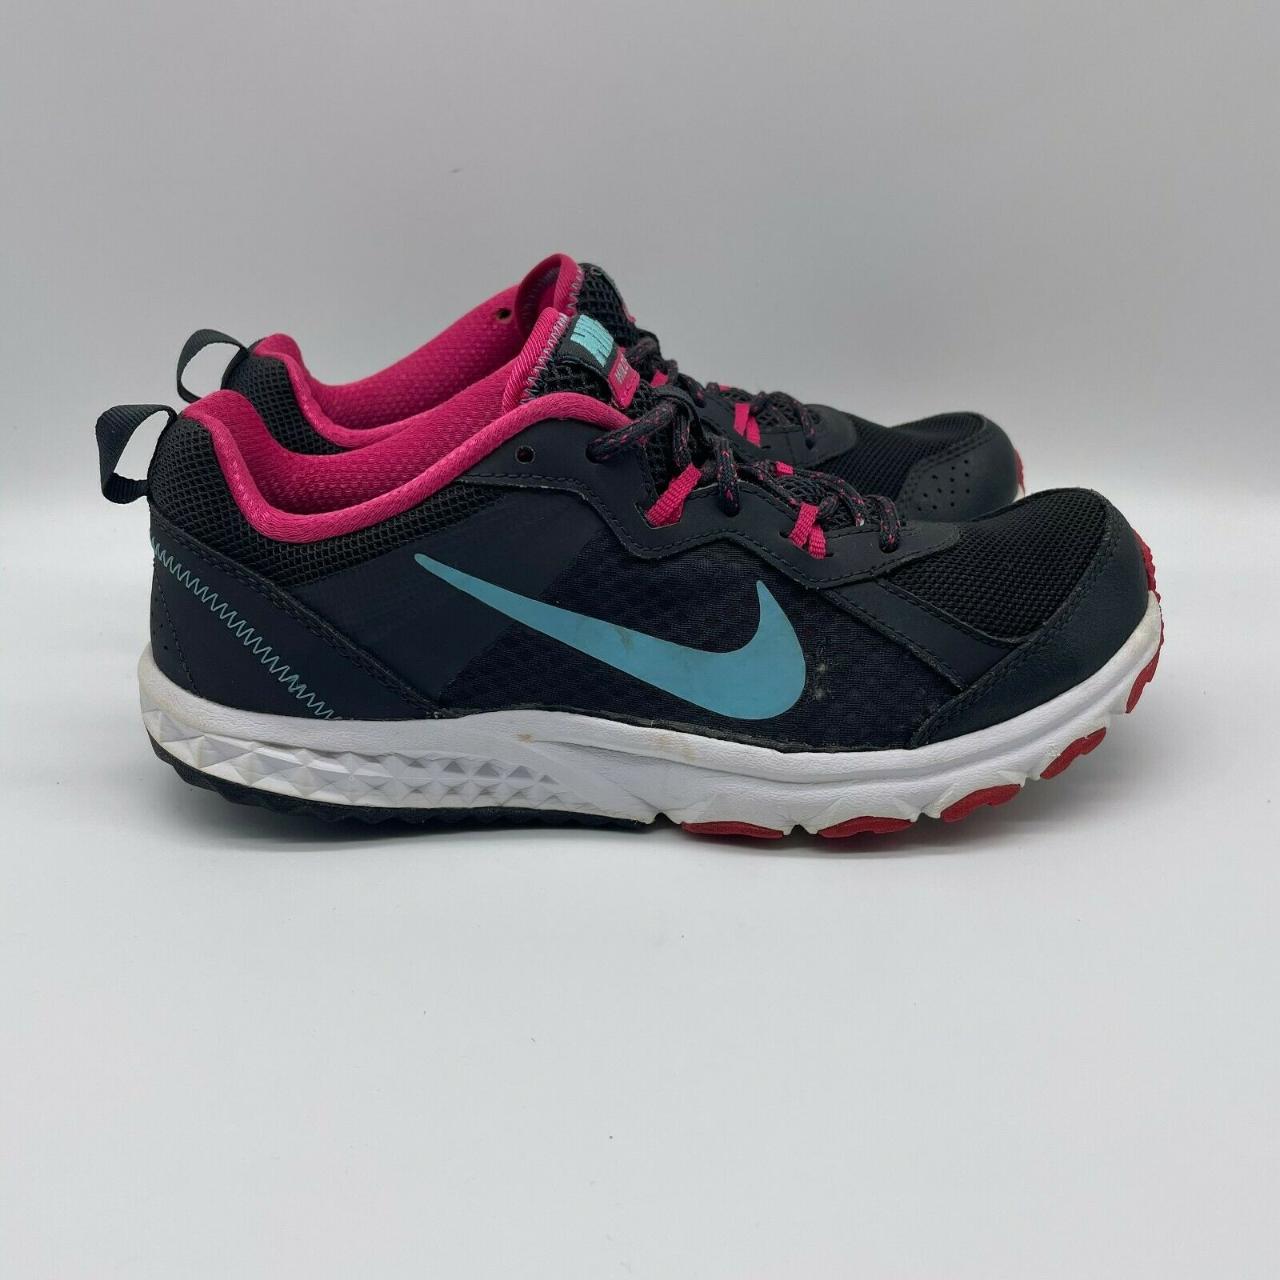 Nike Wild Trail Black Pink Women's Shoes Low... - Depop